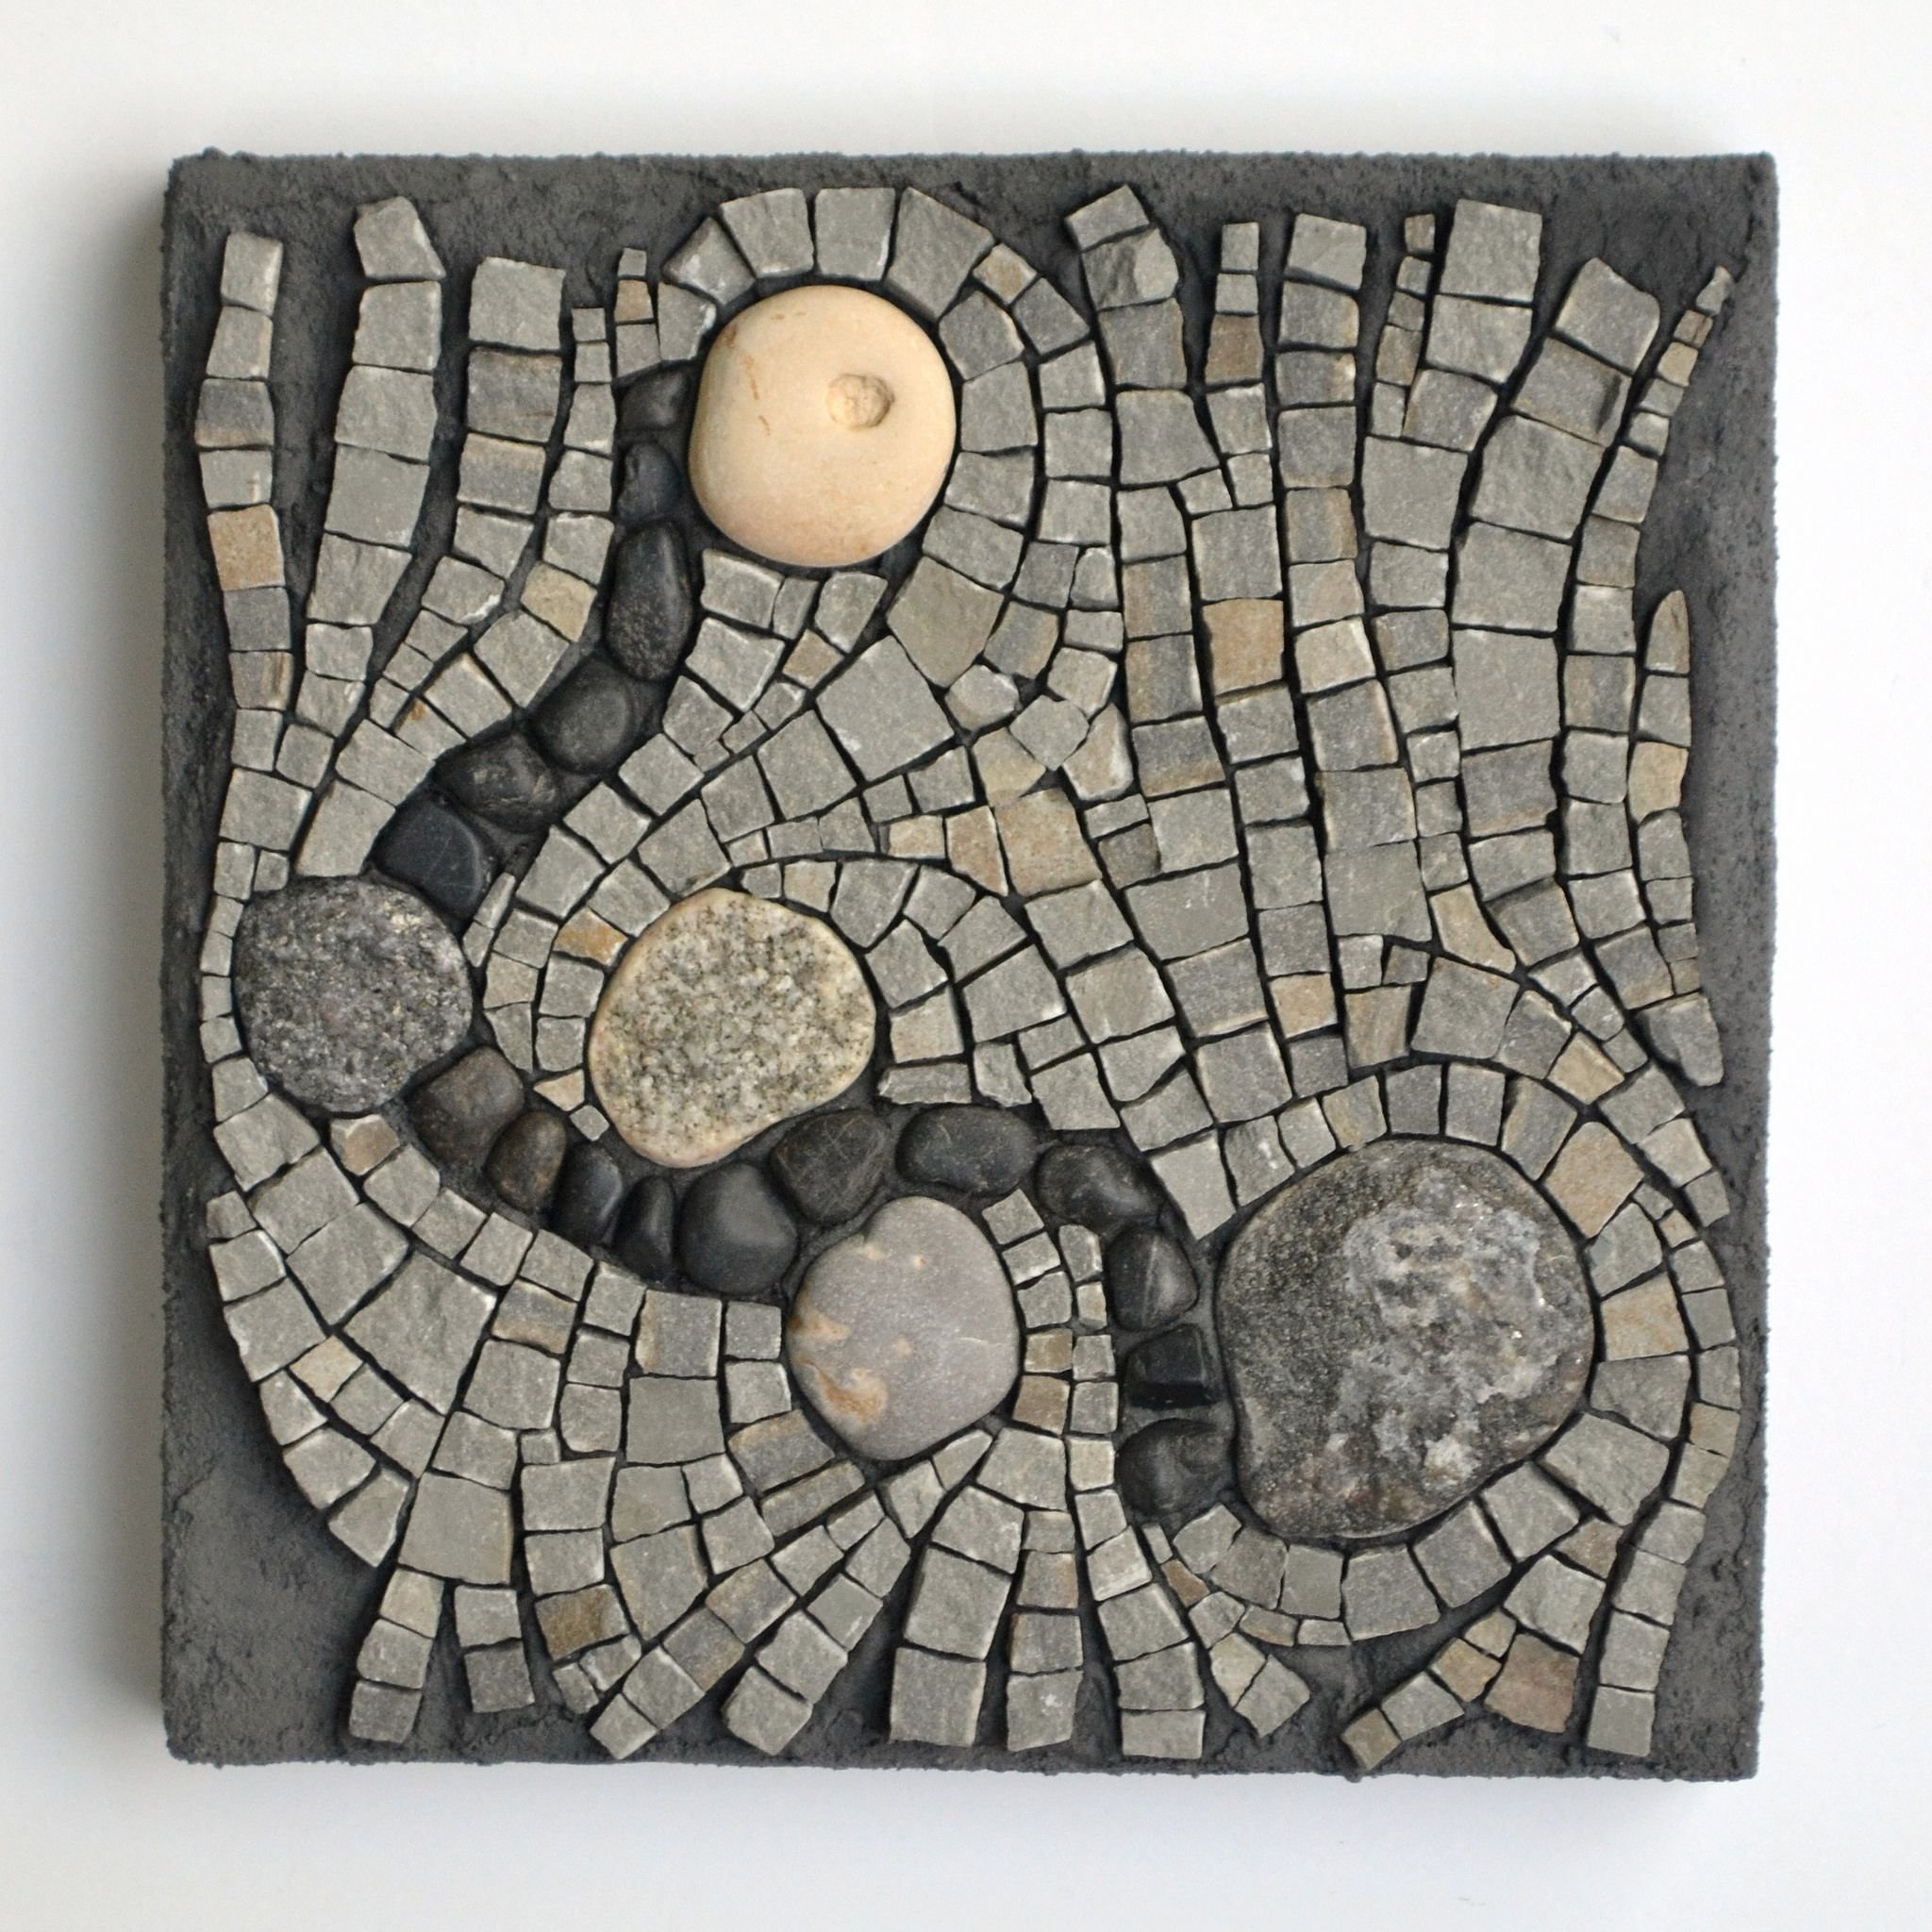 Мозаика из гальки. Мозаика из каменных плиточек. Мозаика каменная gh2001 мозаика каменная. Мозаичное панно из галечника. Pebble-Mosaic-Stone-Mosaic.